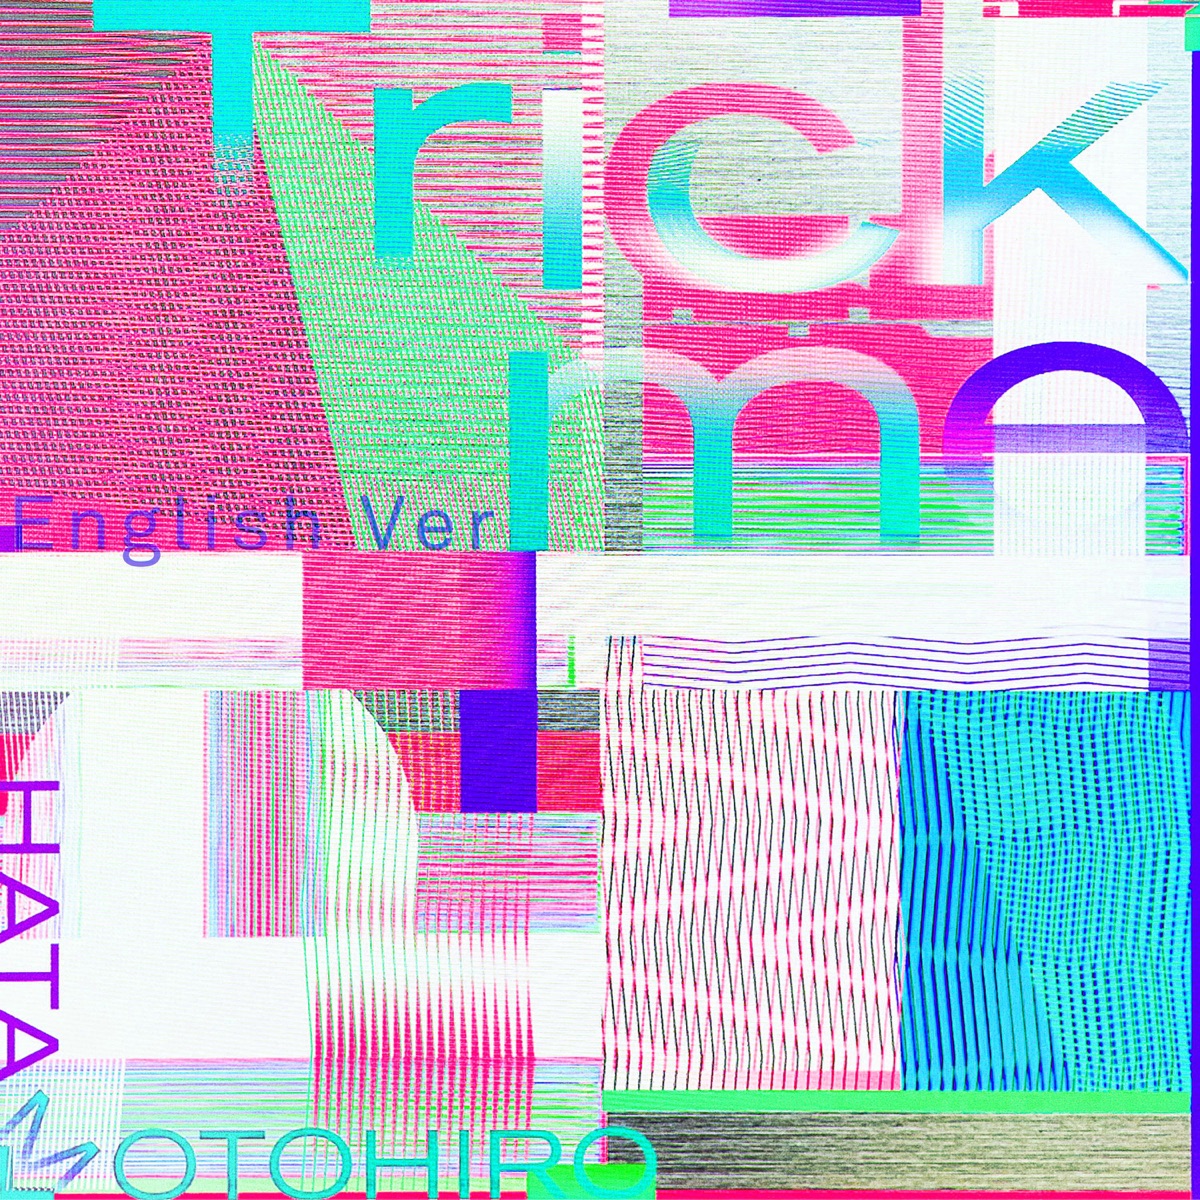 Cover art for『Motohiro Hata - Trick me (English ver.)』from the release『Trick me (English ver.)』